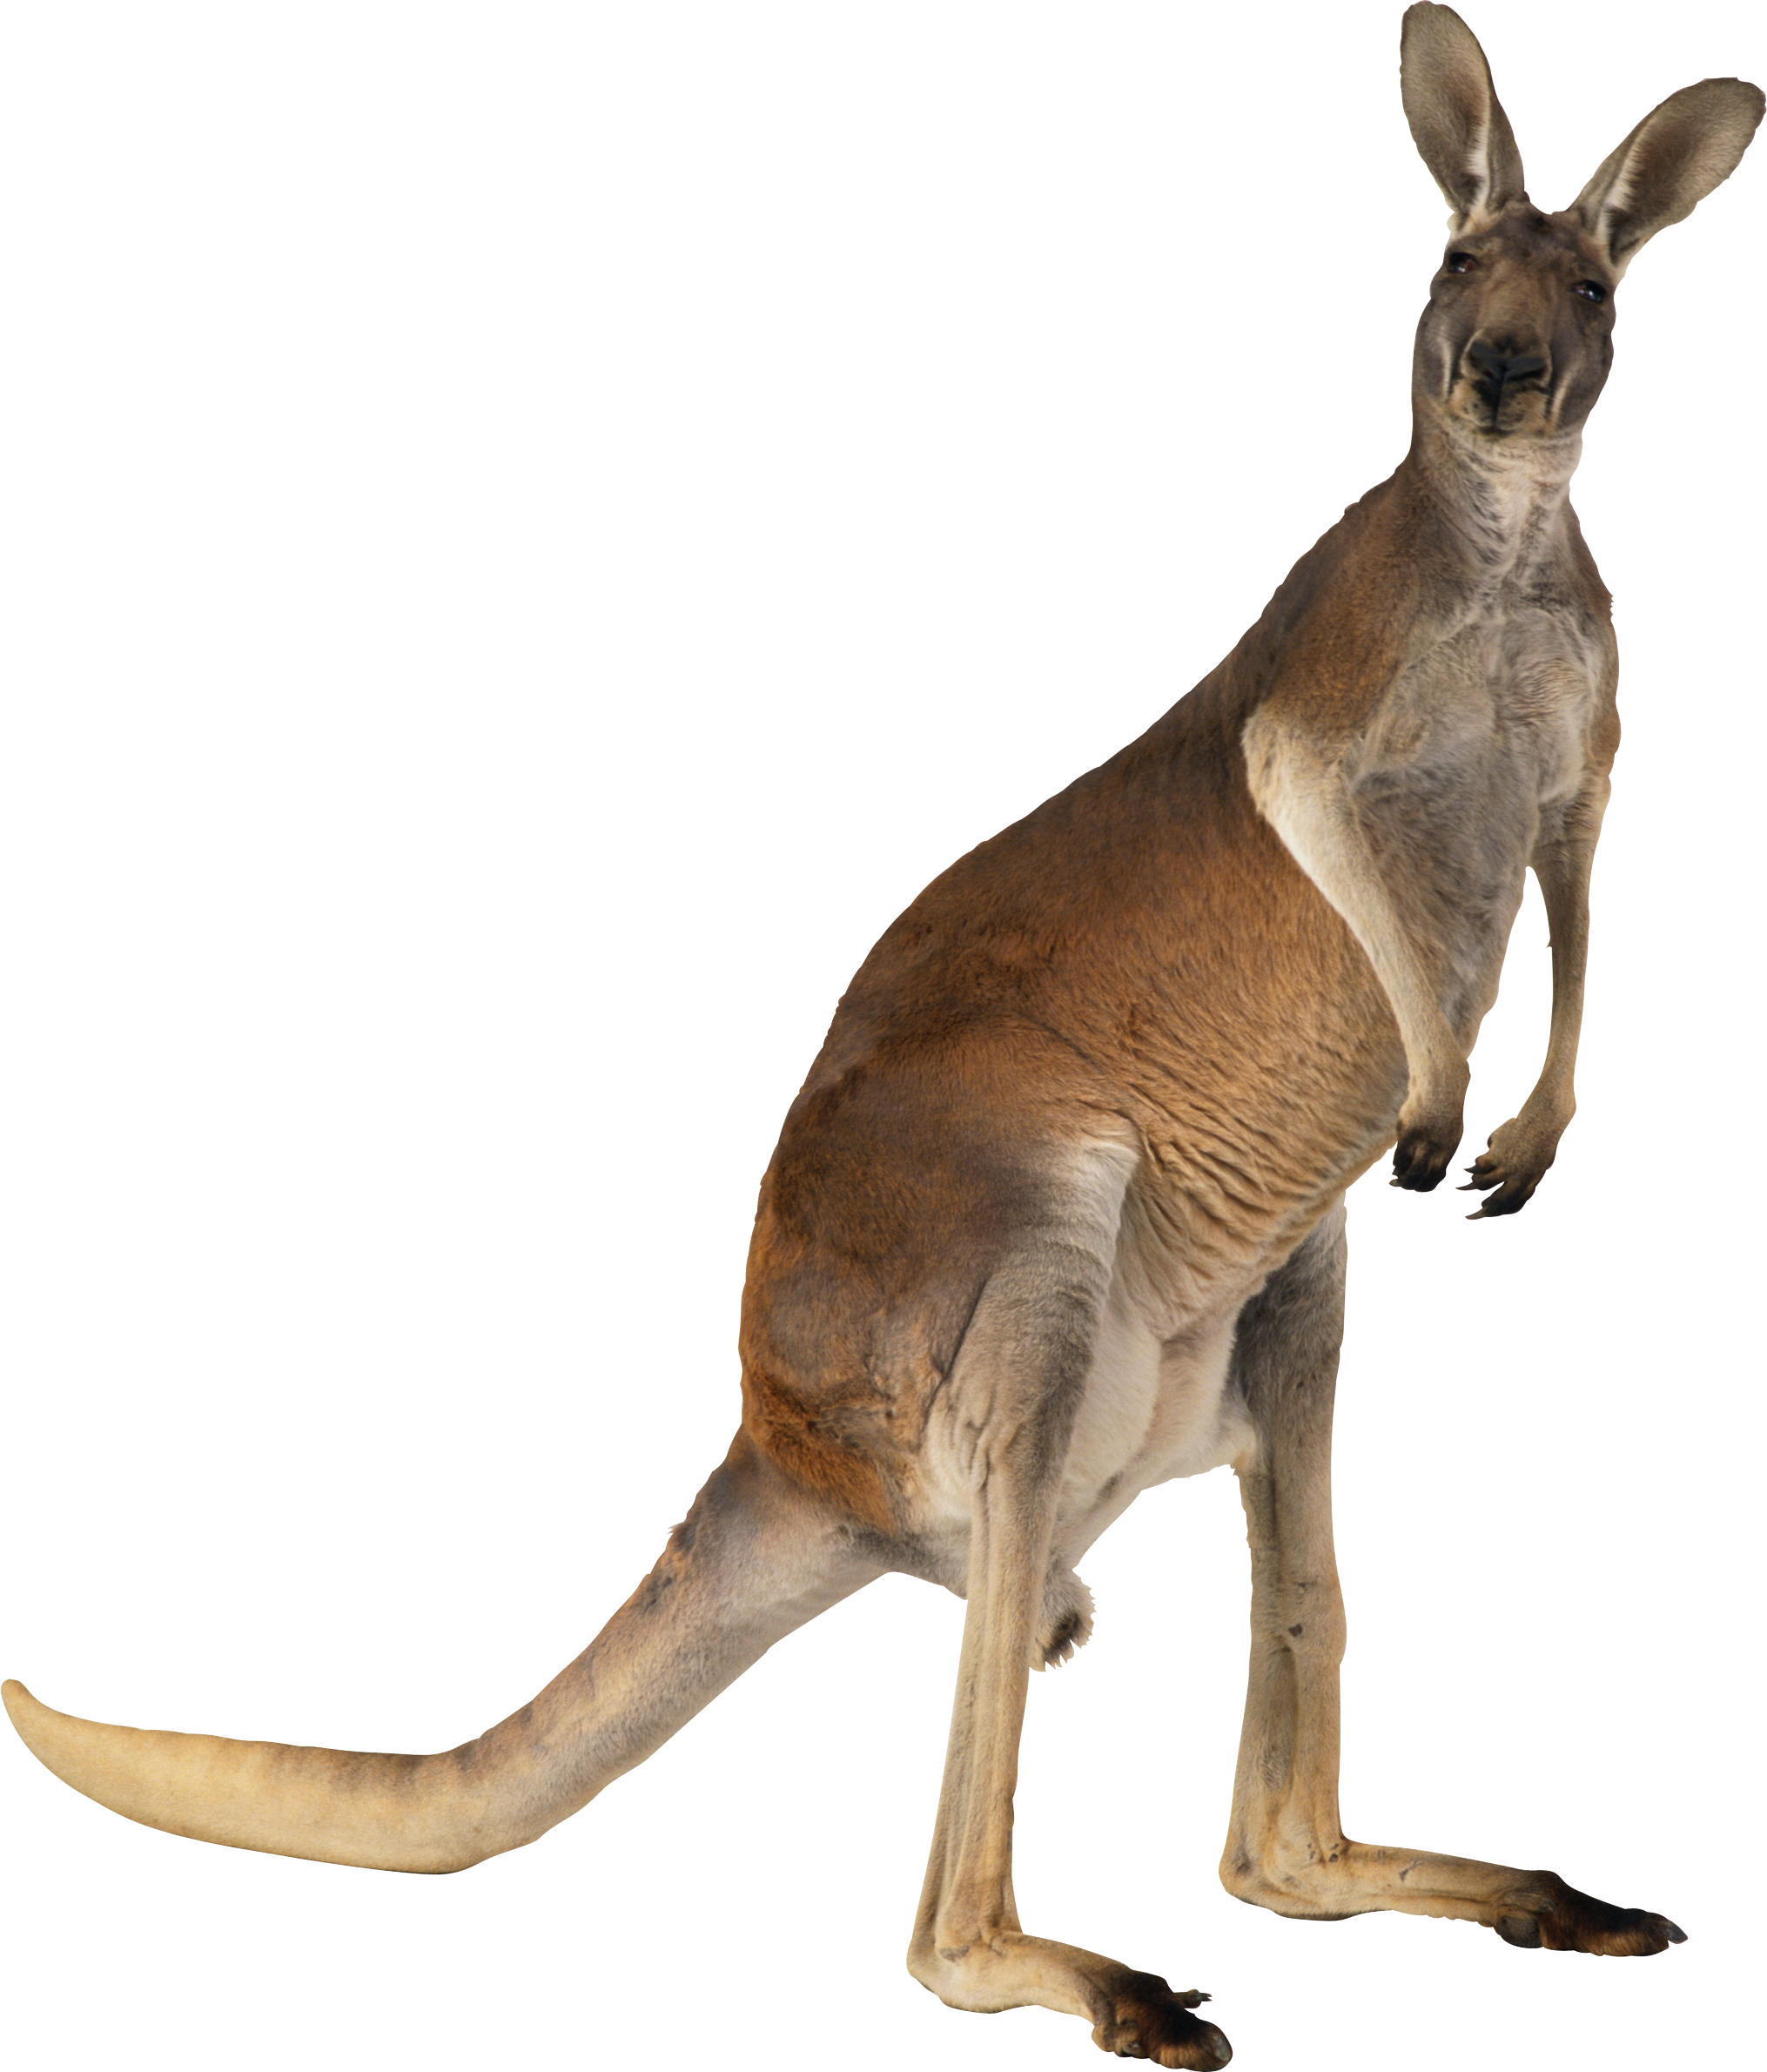 Png images free download. Feet clipart kangaroo